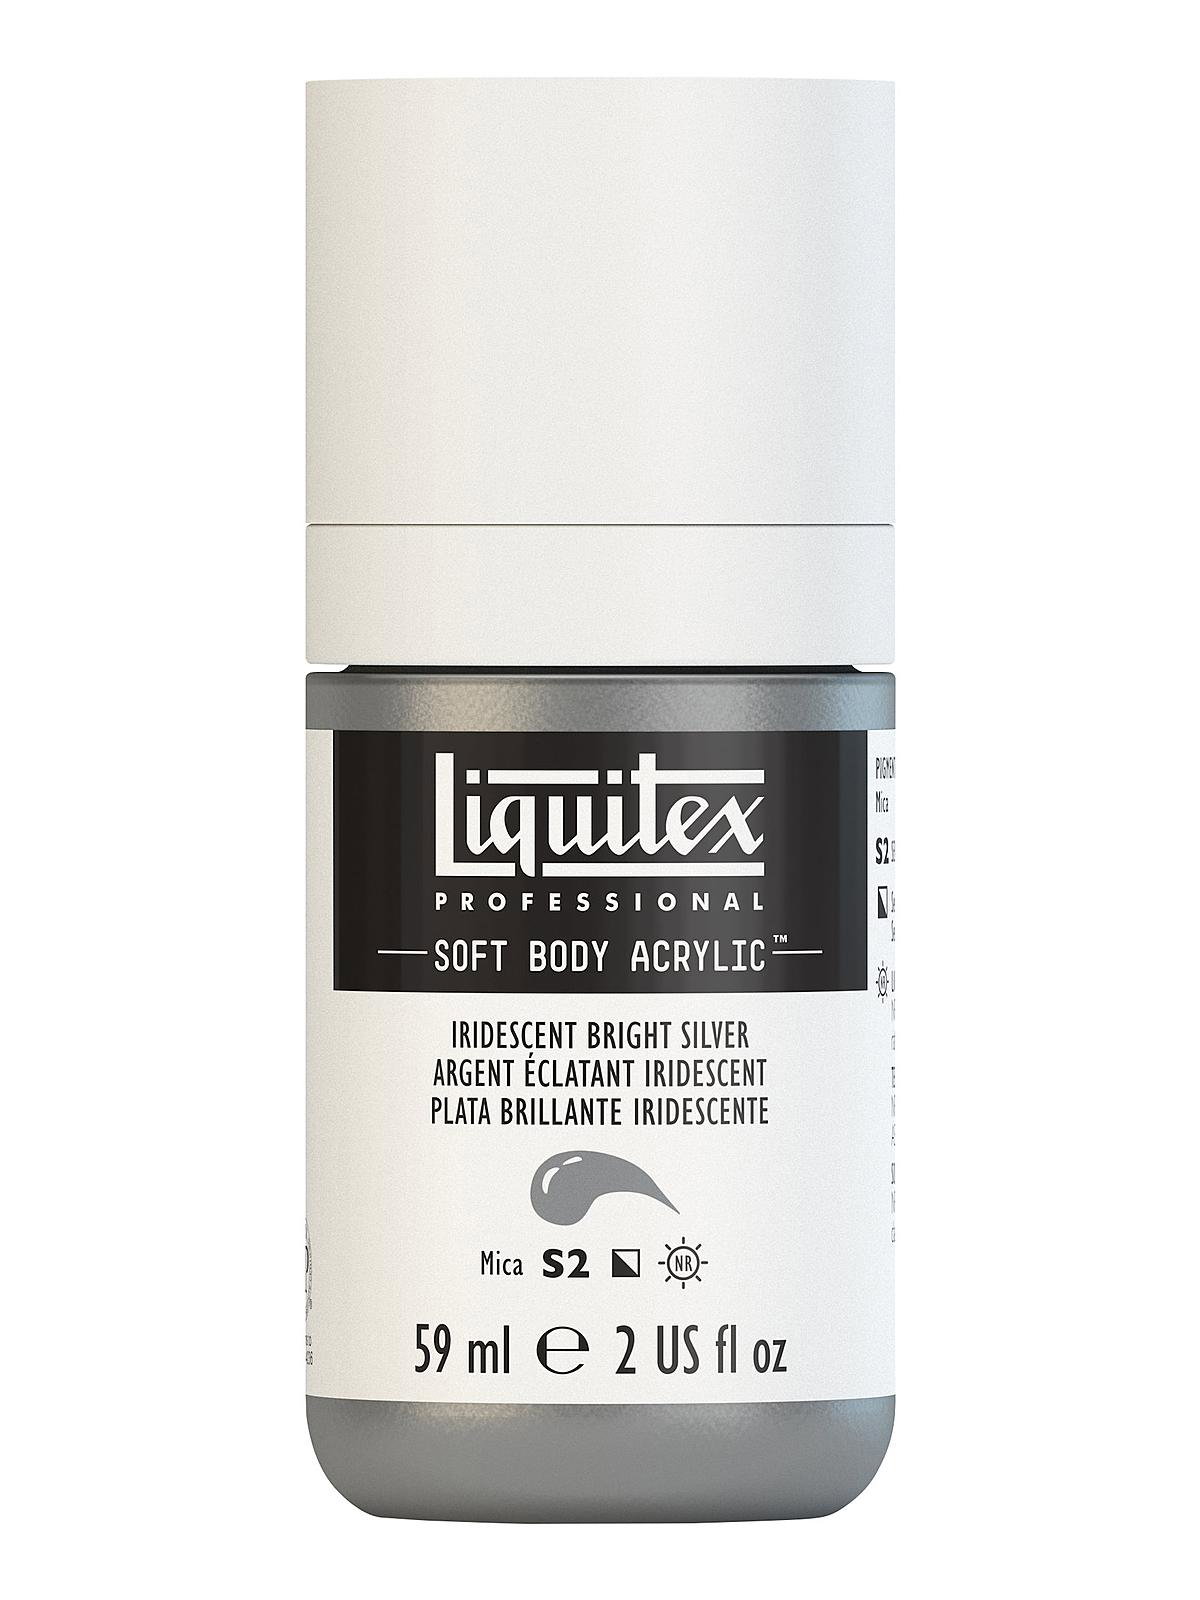 Liquitex Professional Soft Body Acrylic 2oz Mars Black